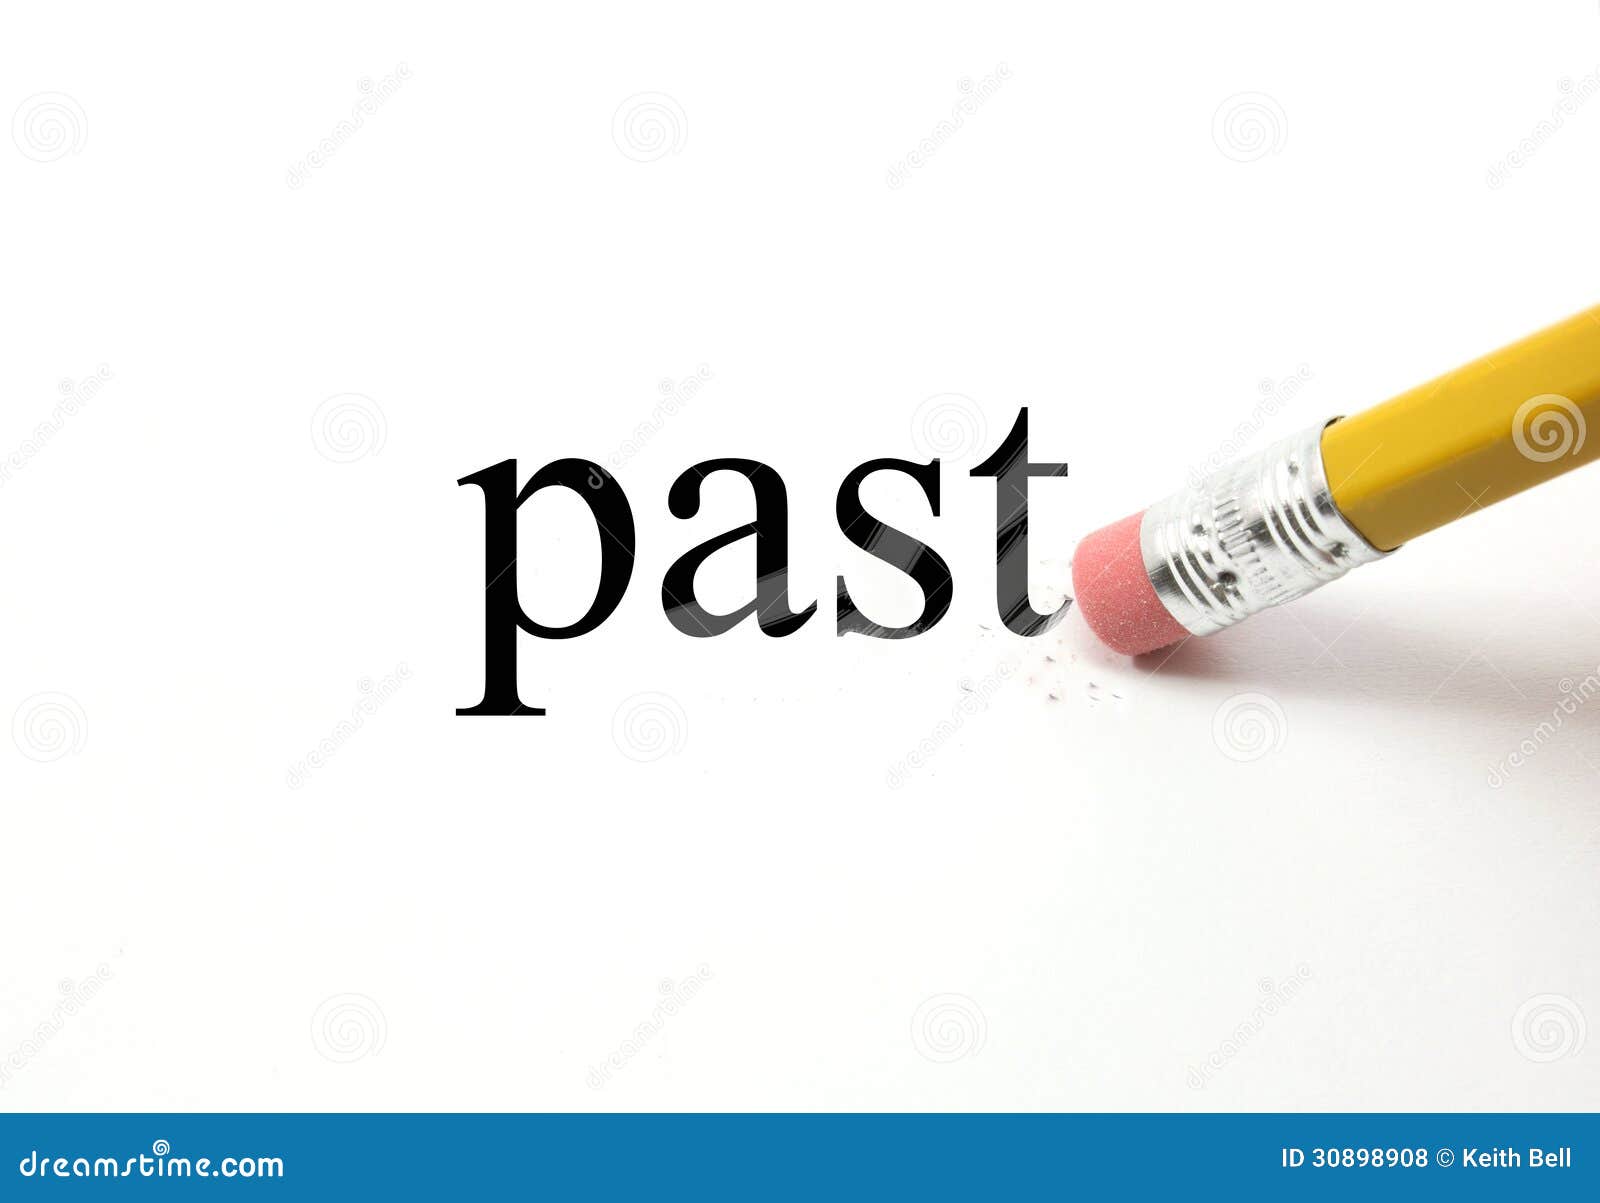 erasing the past